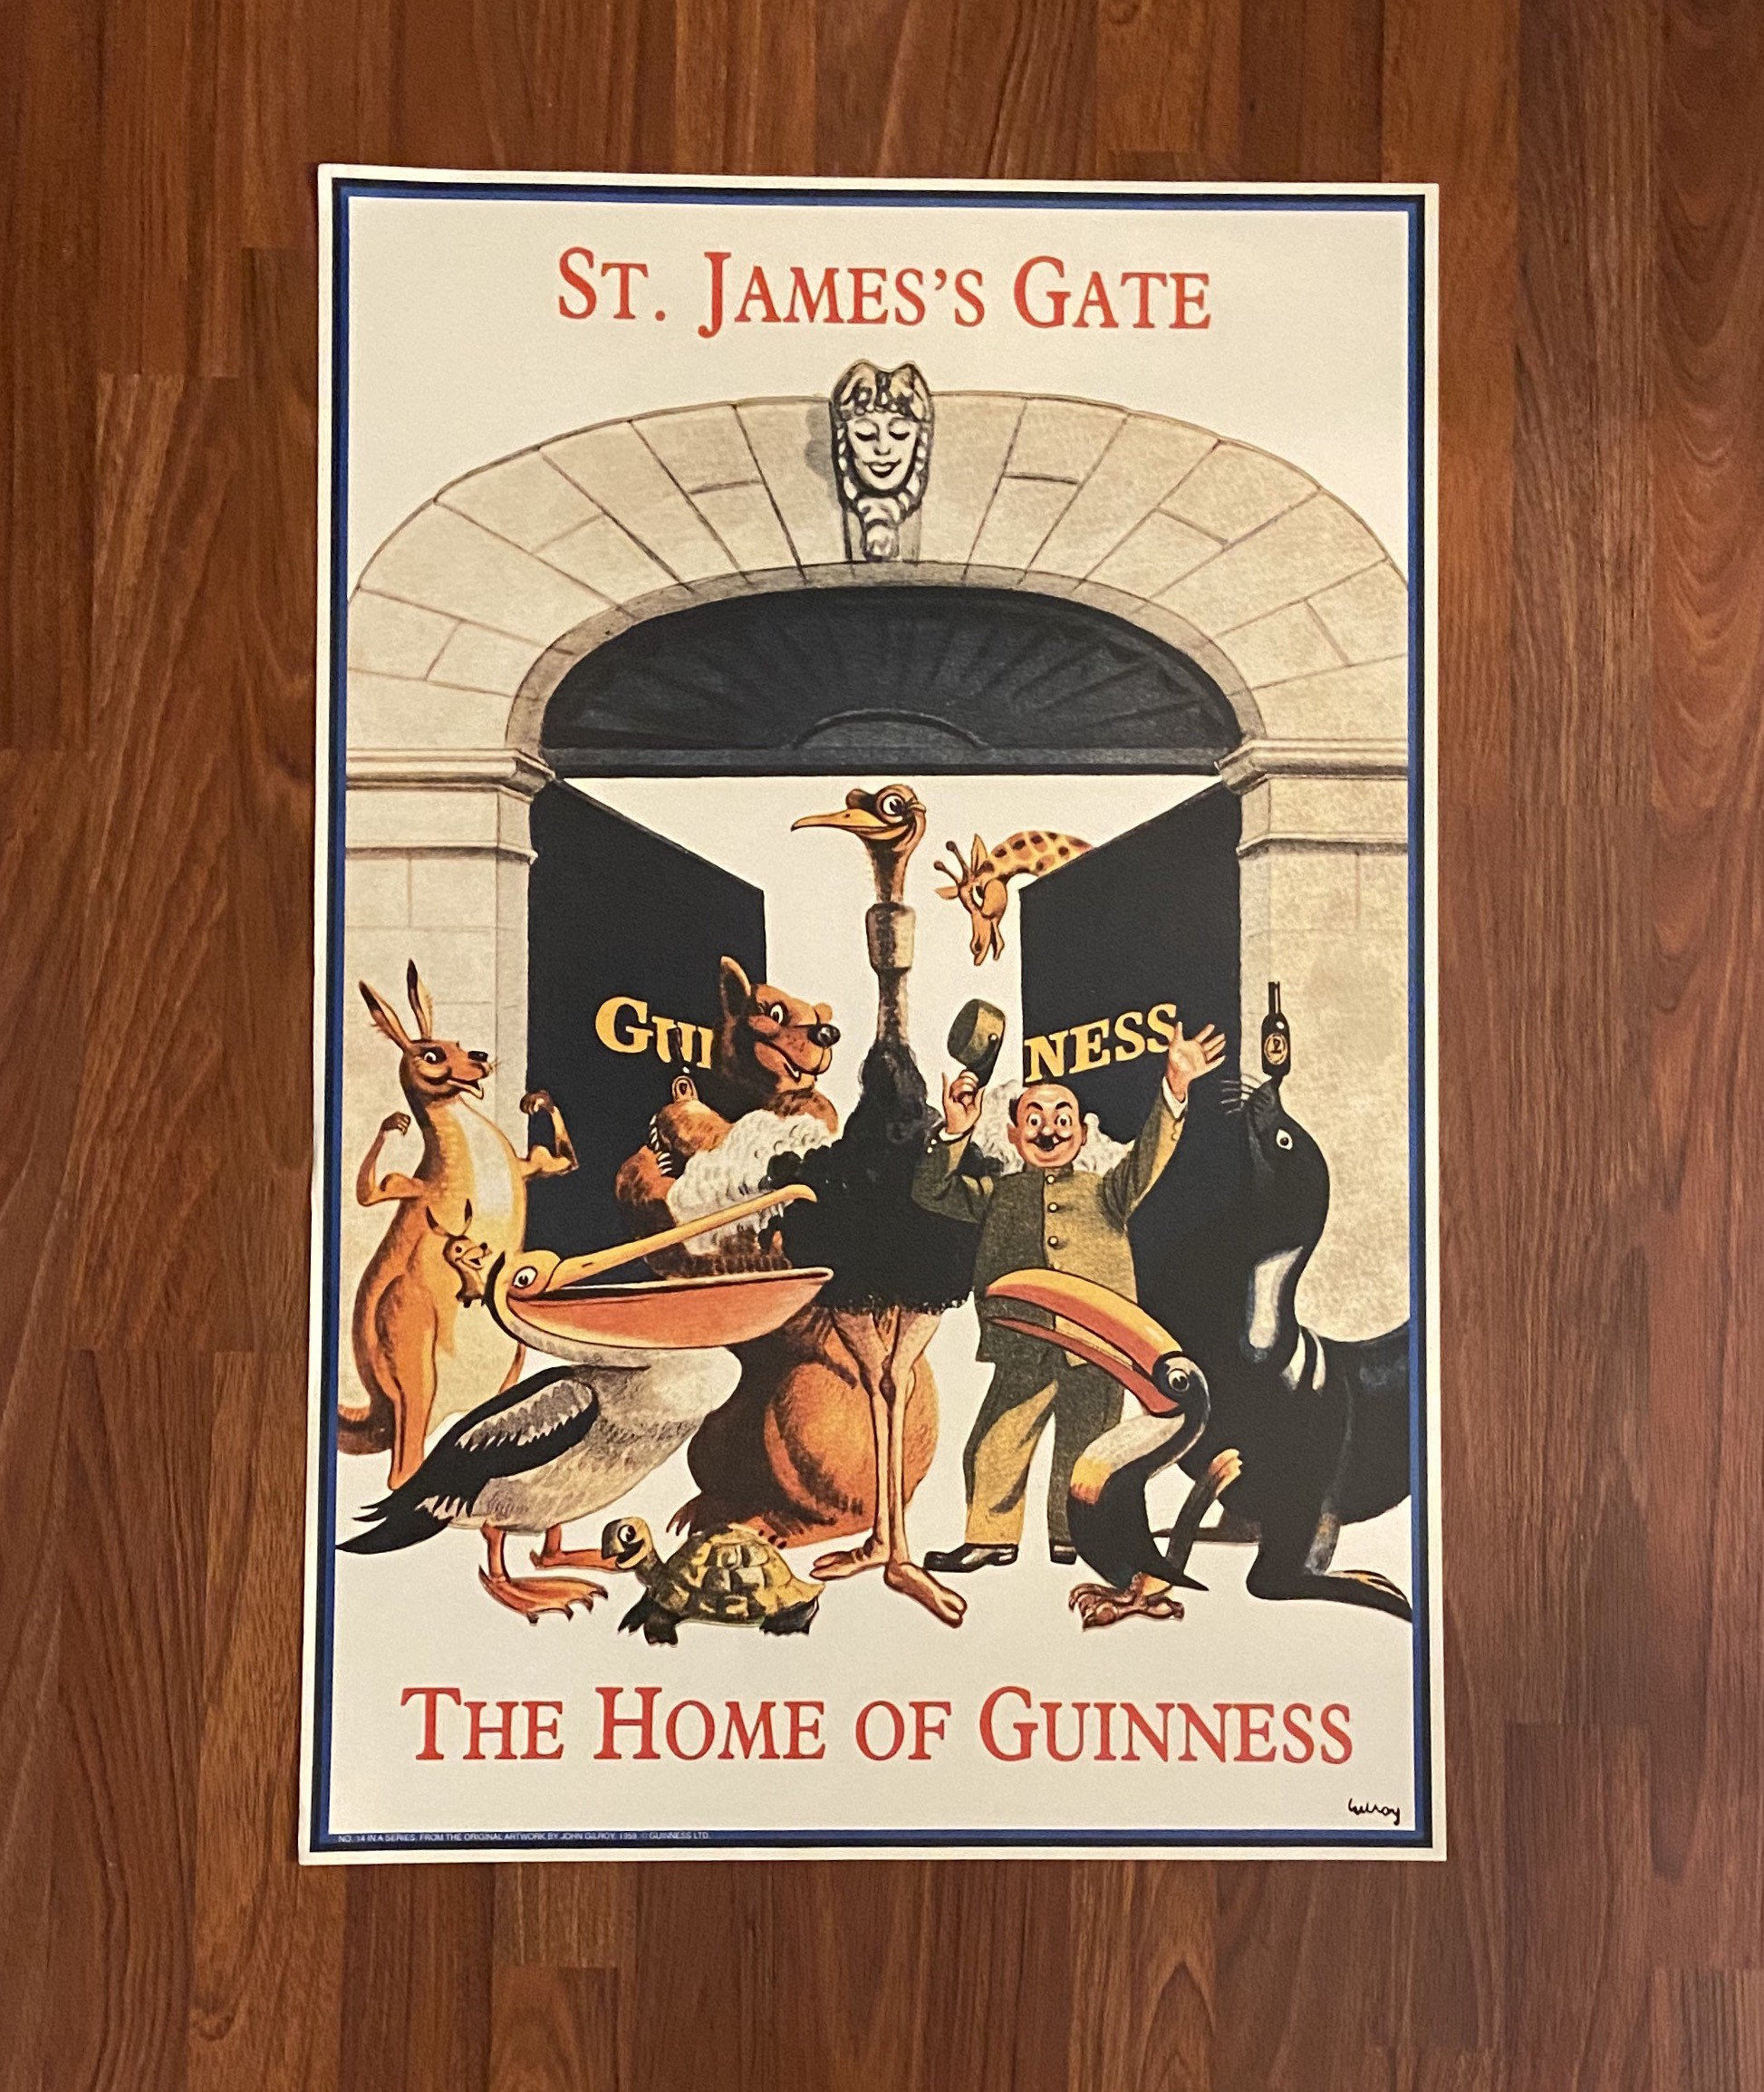 Guinness Gilroy Pint Glasses Gift Box 20oz / 568ml